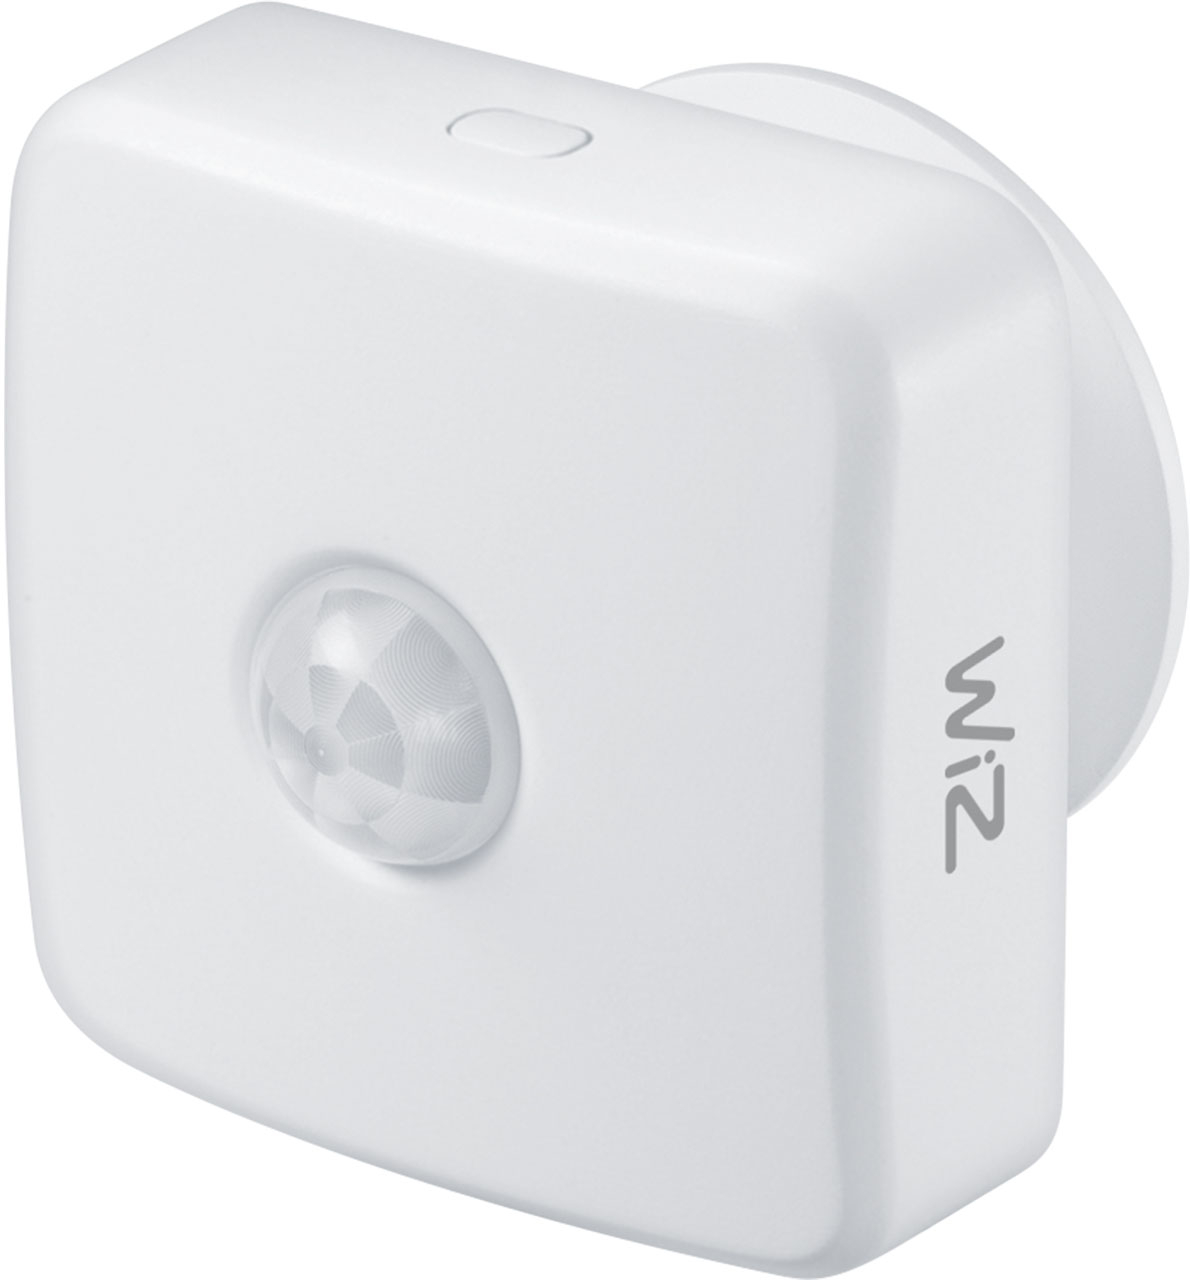 Angle View: WiZ - Indoor Motion Sensor - White